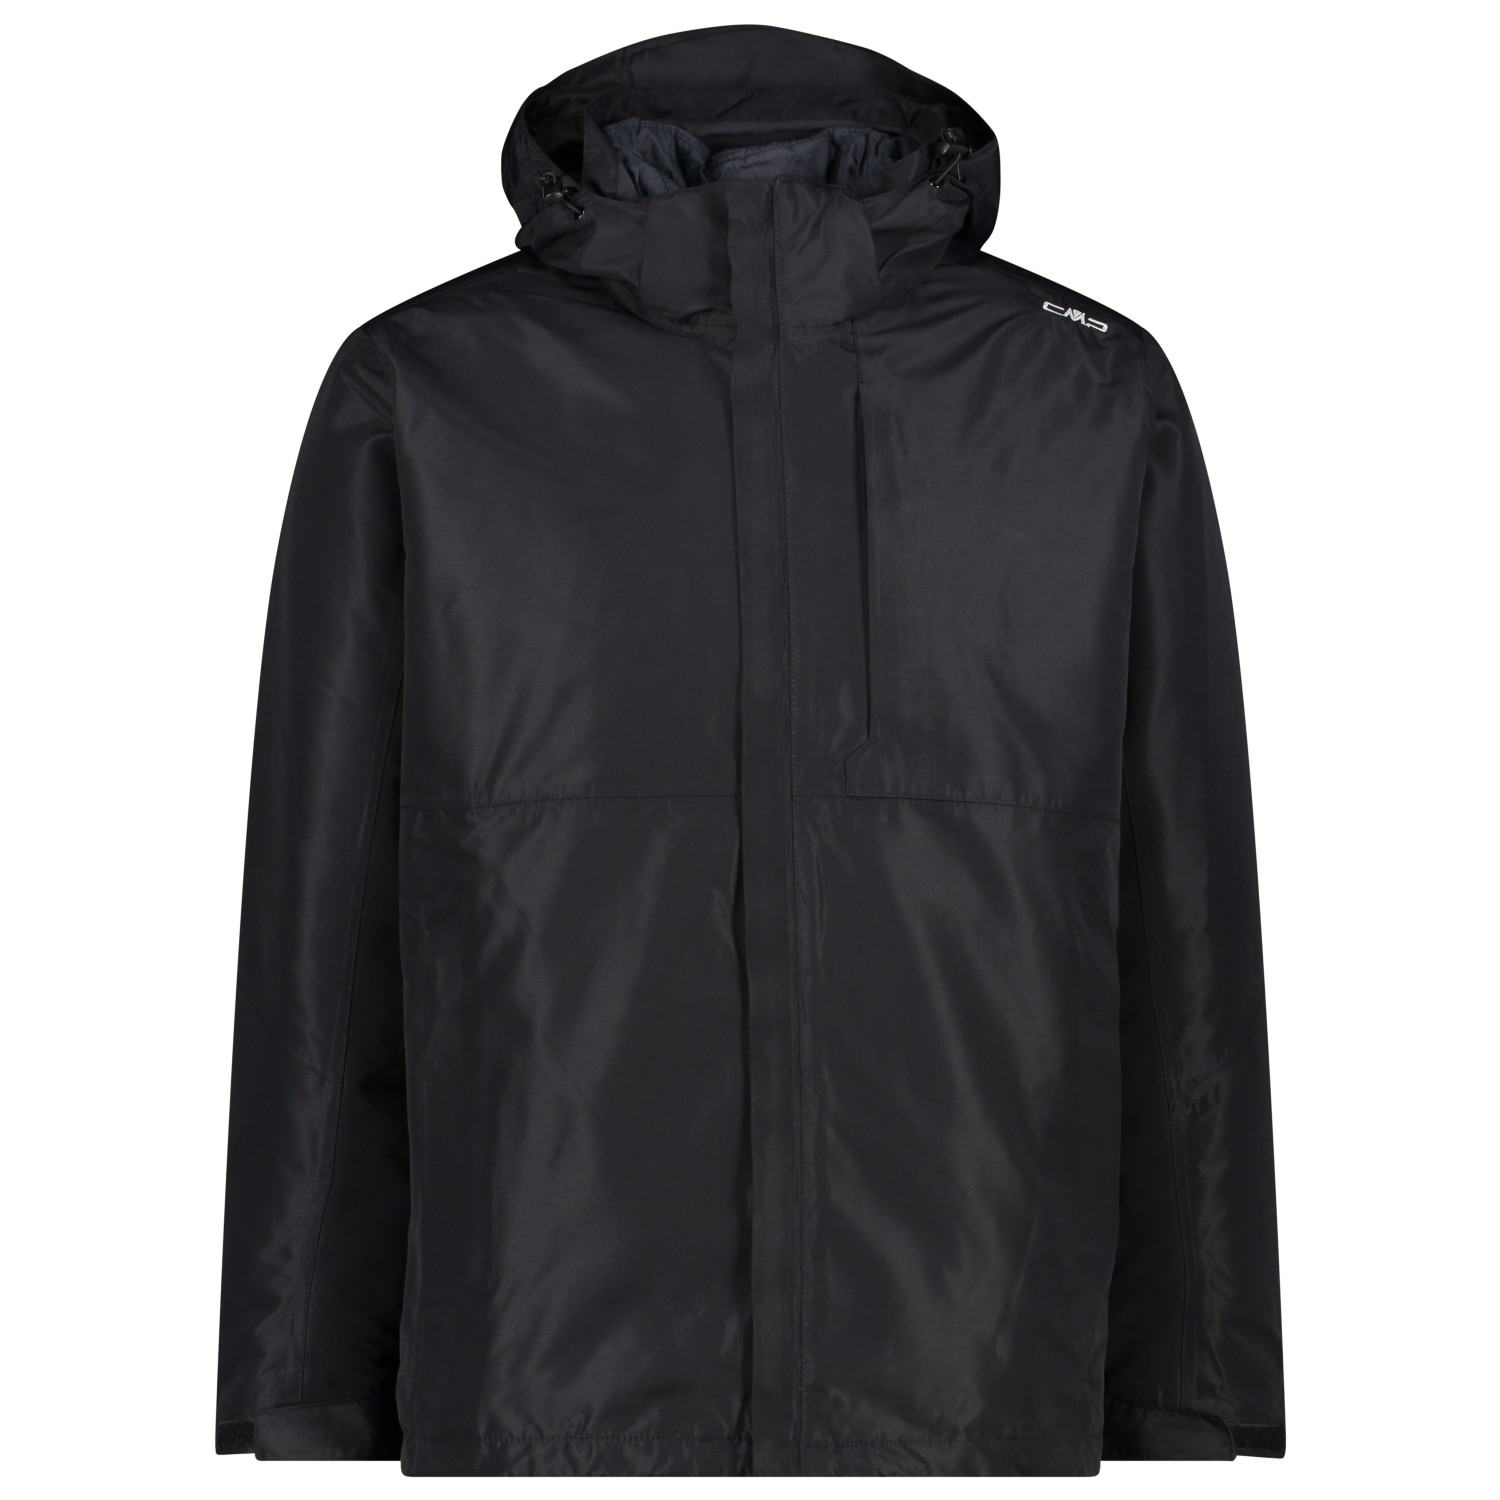 Двойная куртка Cmp Jacket Zip Hood Detachable Inner Taslan, цвет Nero двойная куртка cmp jacket zip hood detachable inner taslan цвет nero